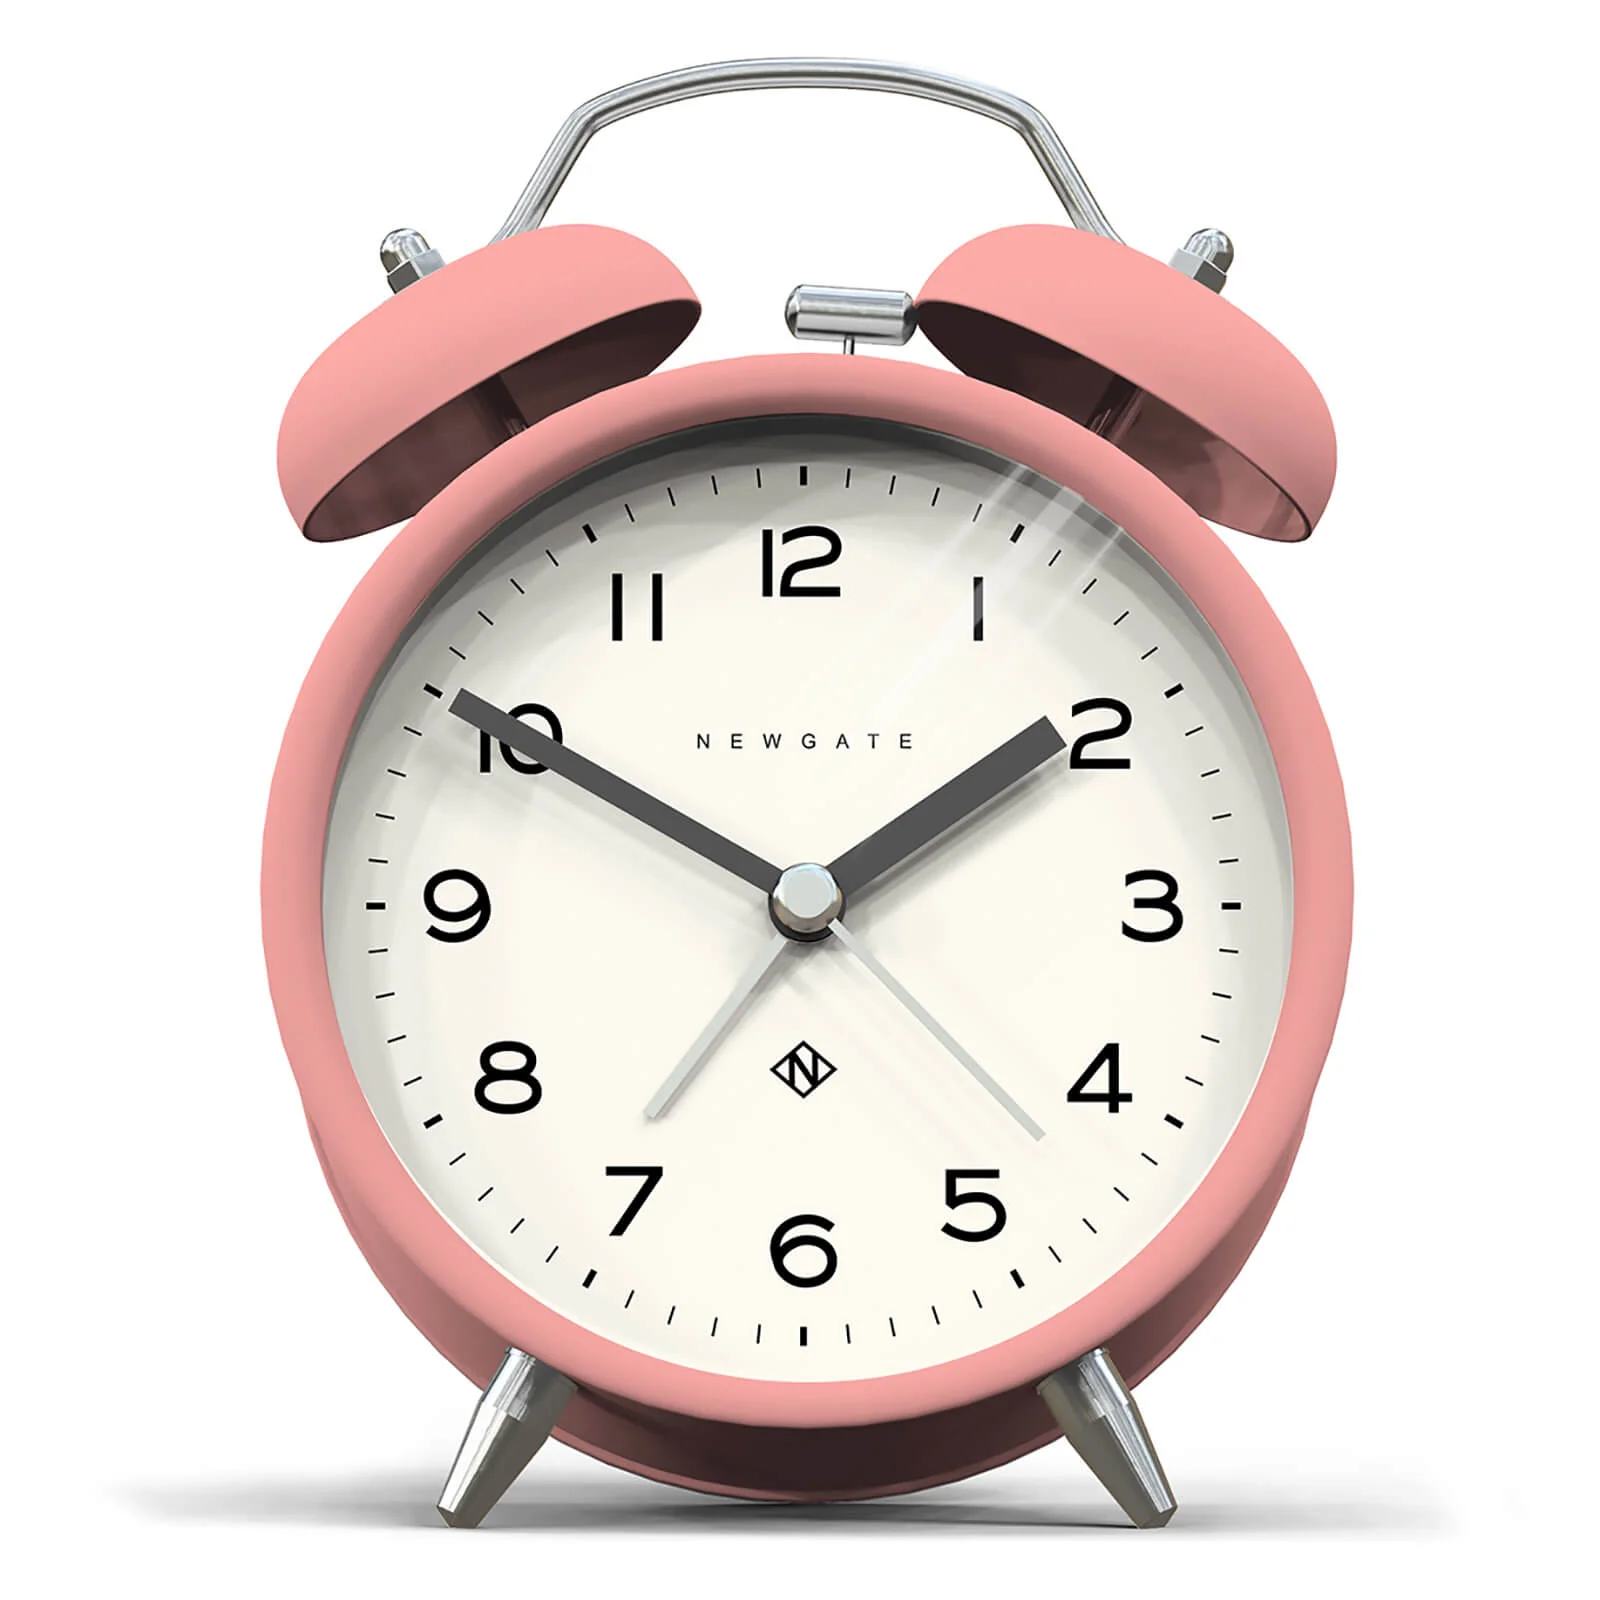 Newgate Charlie Bell Echo Silent Alarm Clock - Pink Image 1